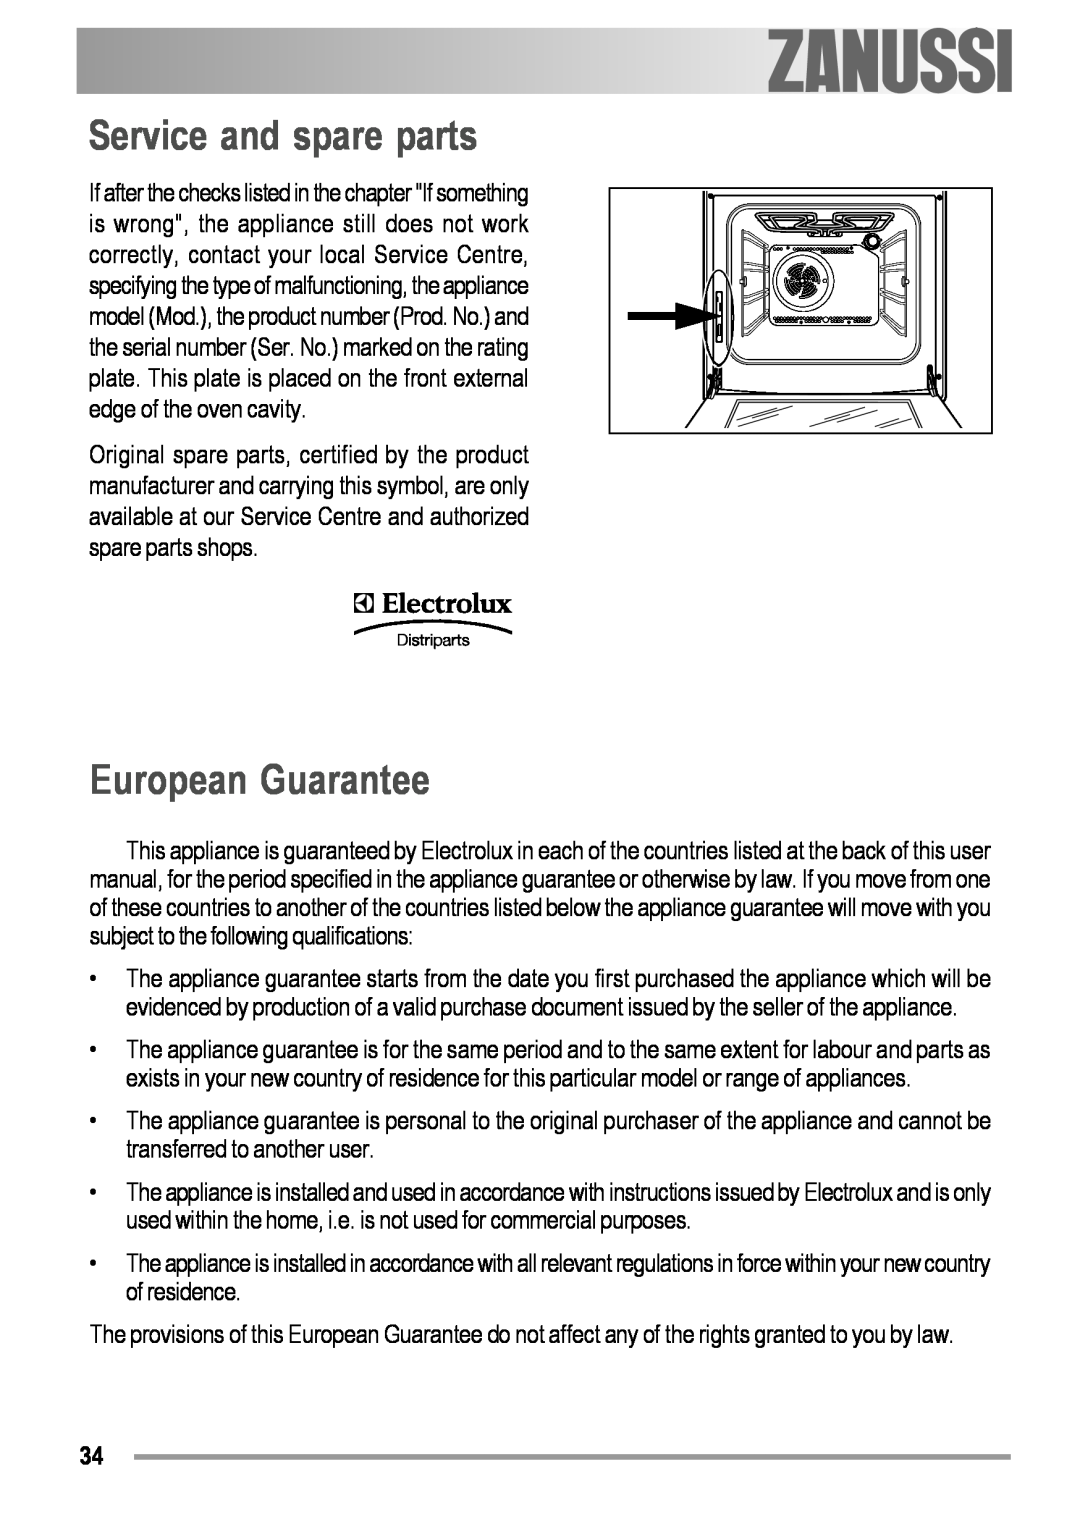 Zanussi ZOB 594 manual Service and spare parts, European Guarantee 